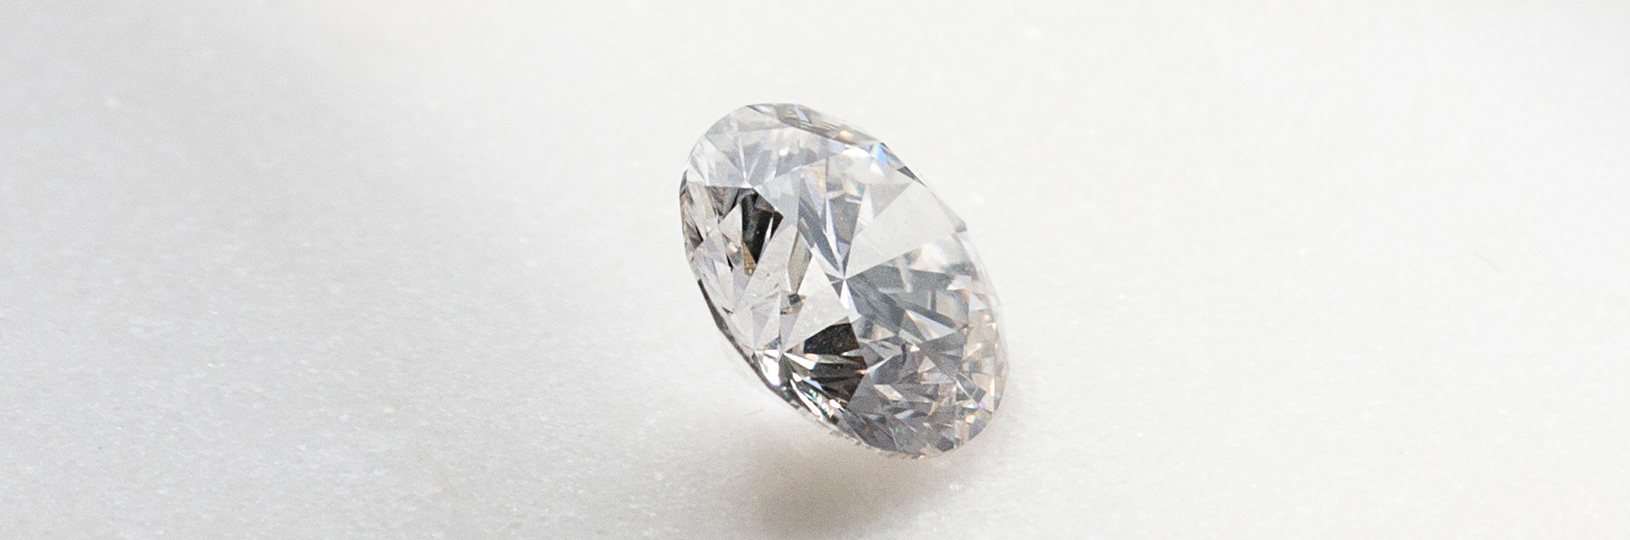 Close up image of an oval cut lab grown diamond